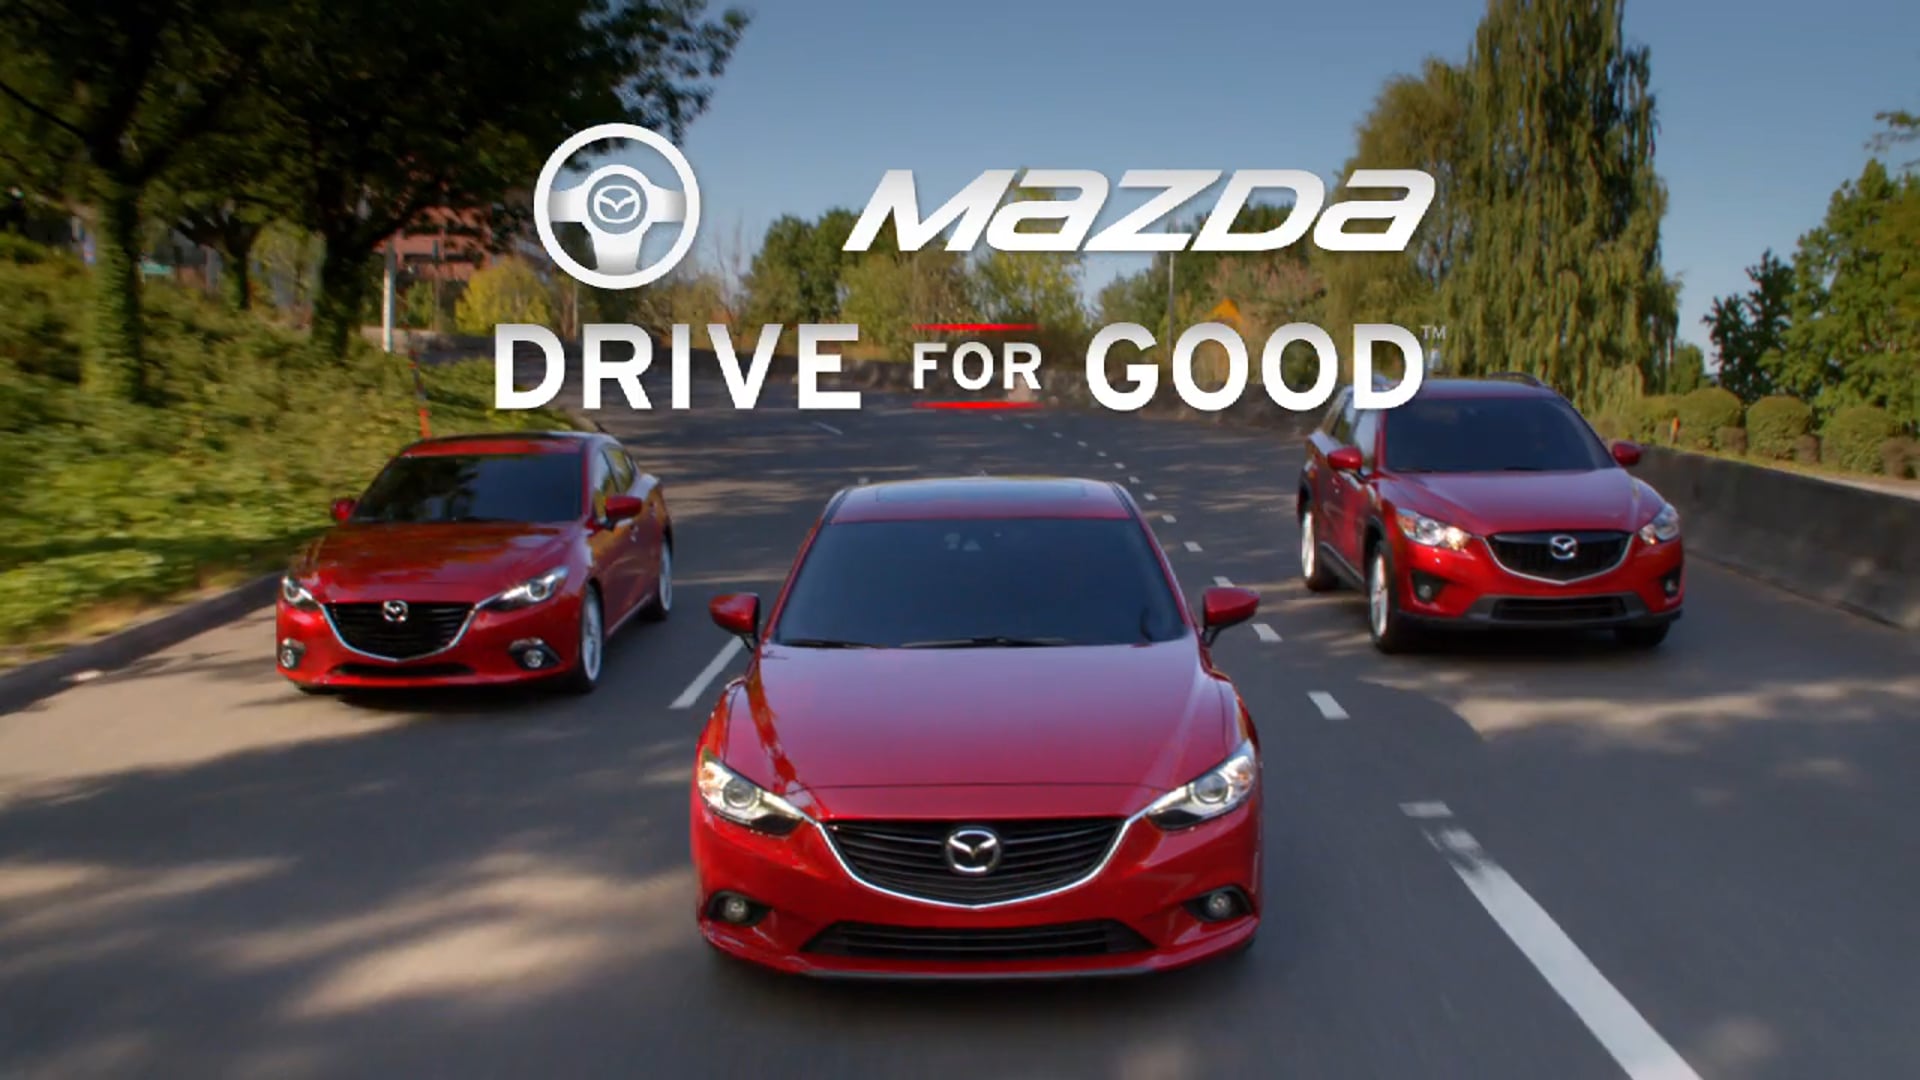 Mazda - "Drive for Good"